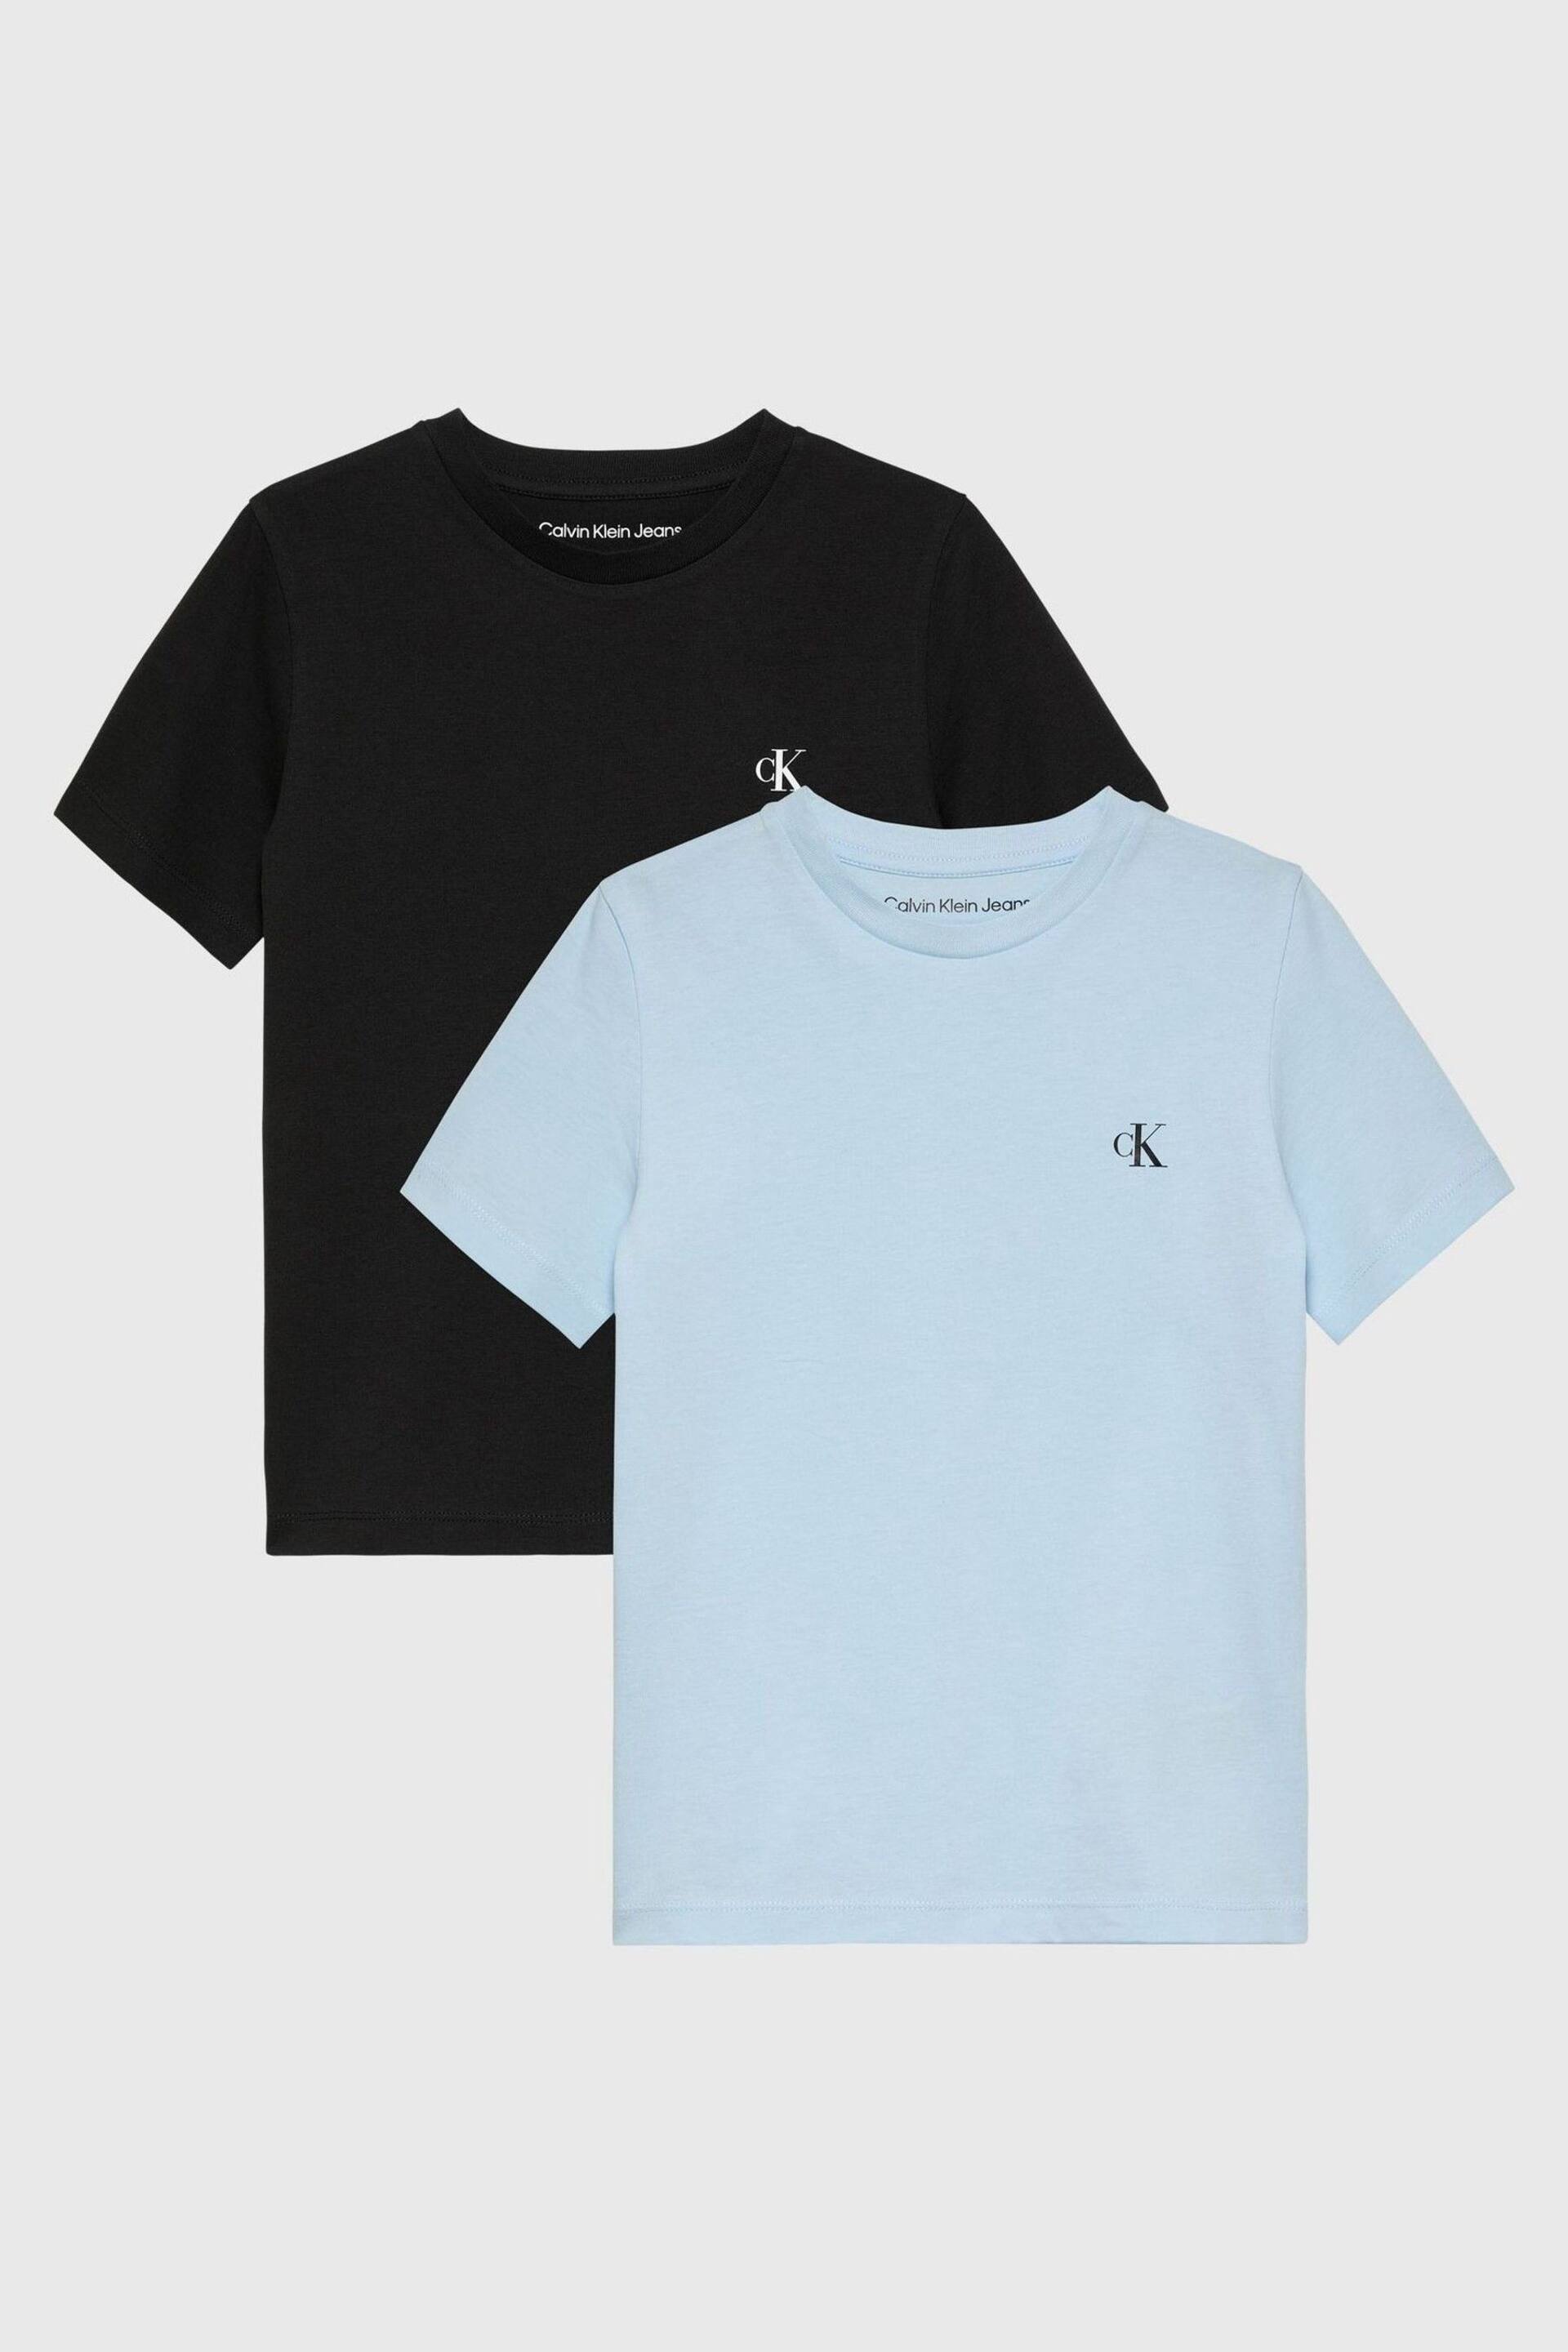 Calvin Klein Jeans Blue Monogram T-Shirt 2 Pack - Image 1 of 5